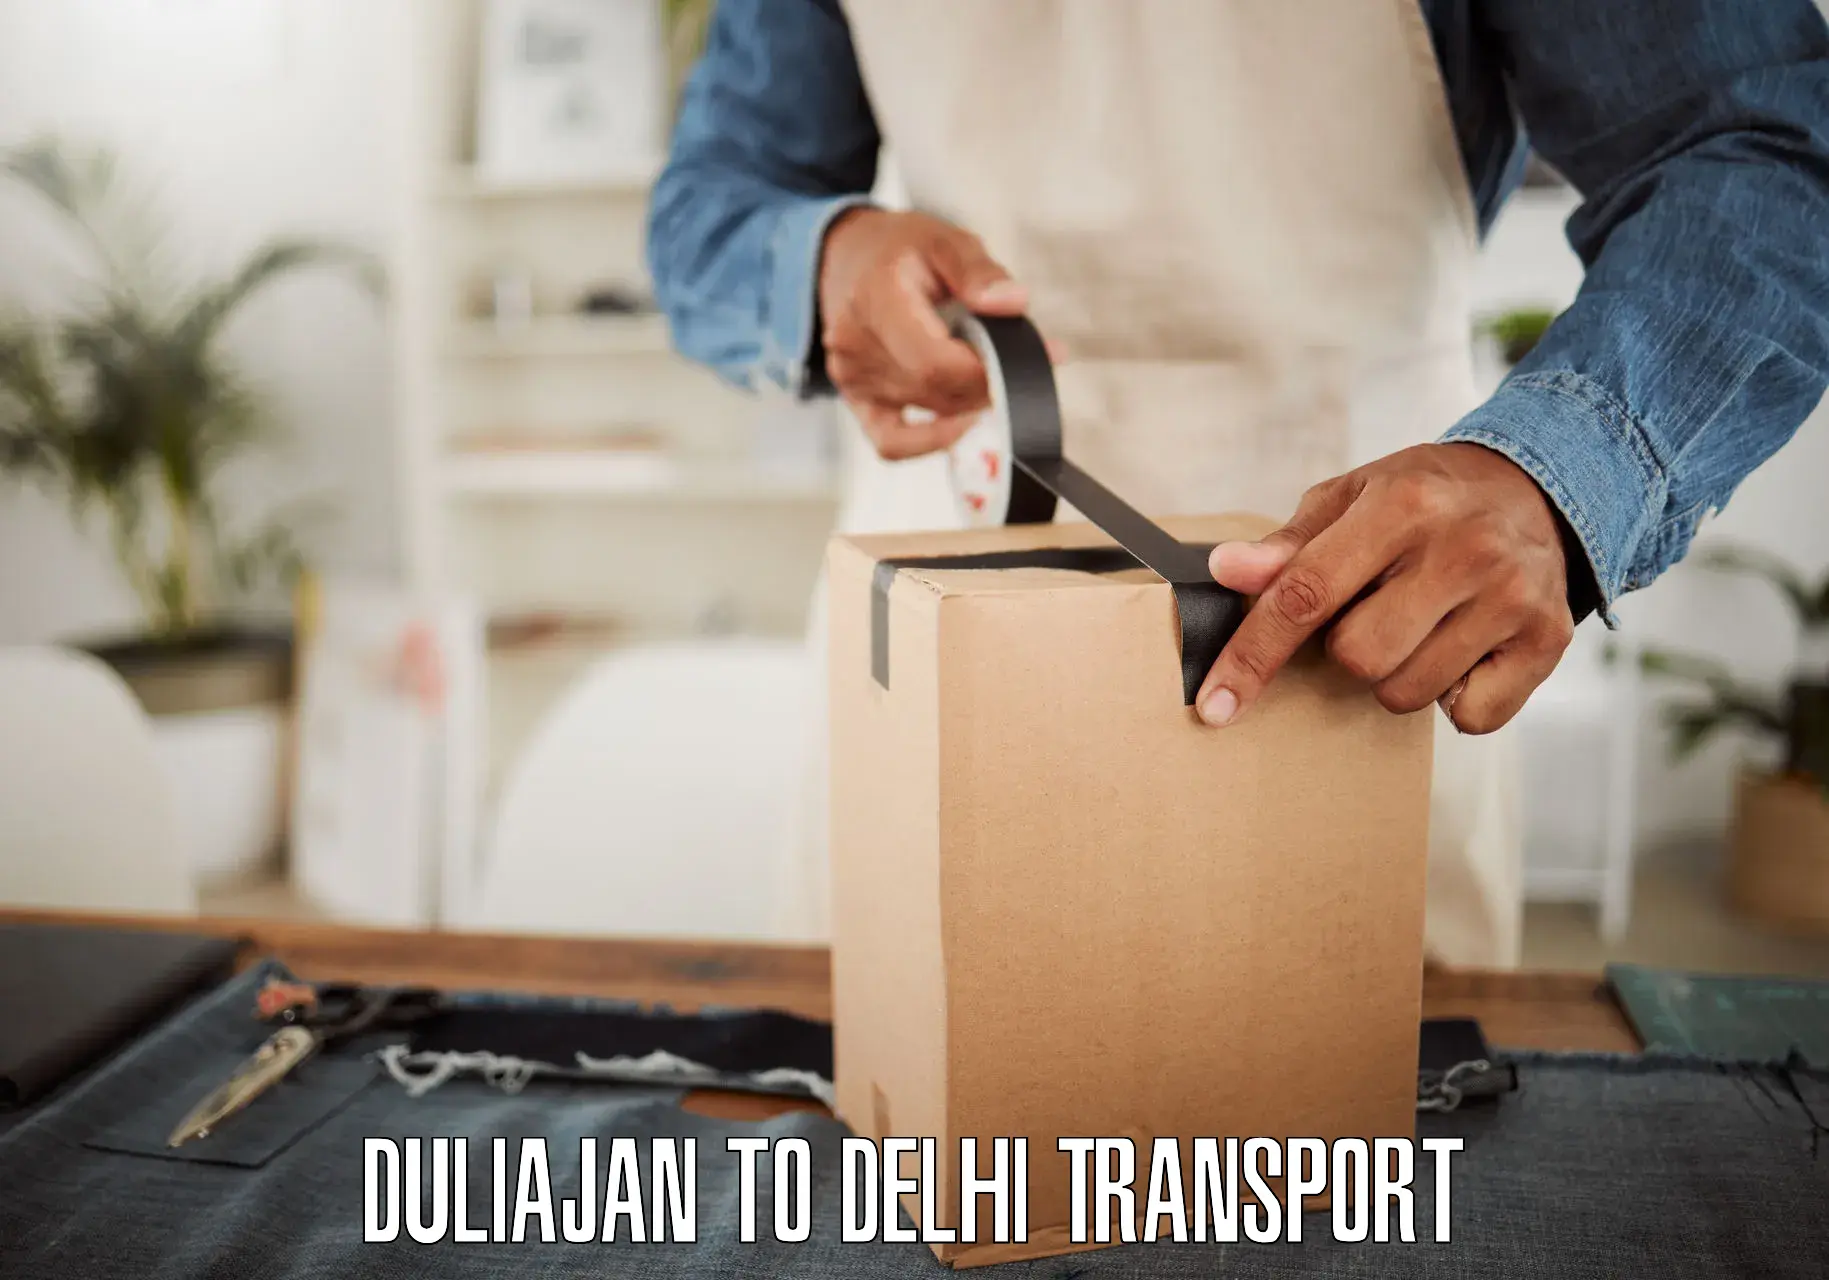 Truck transport companies in India Duliajan to Lodhi Road